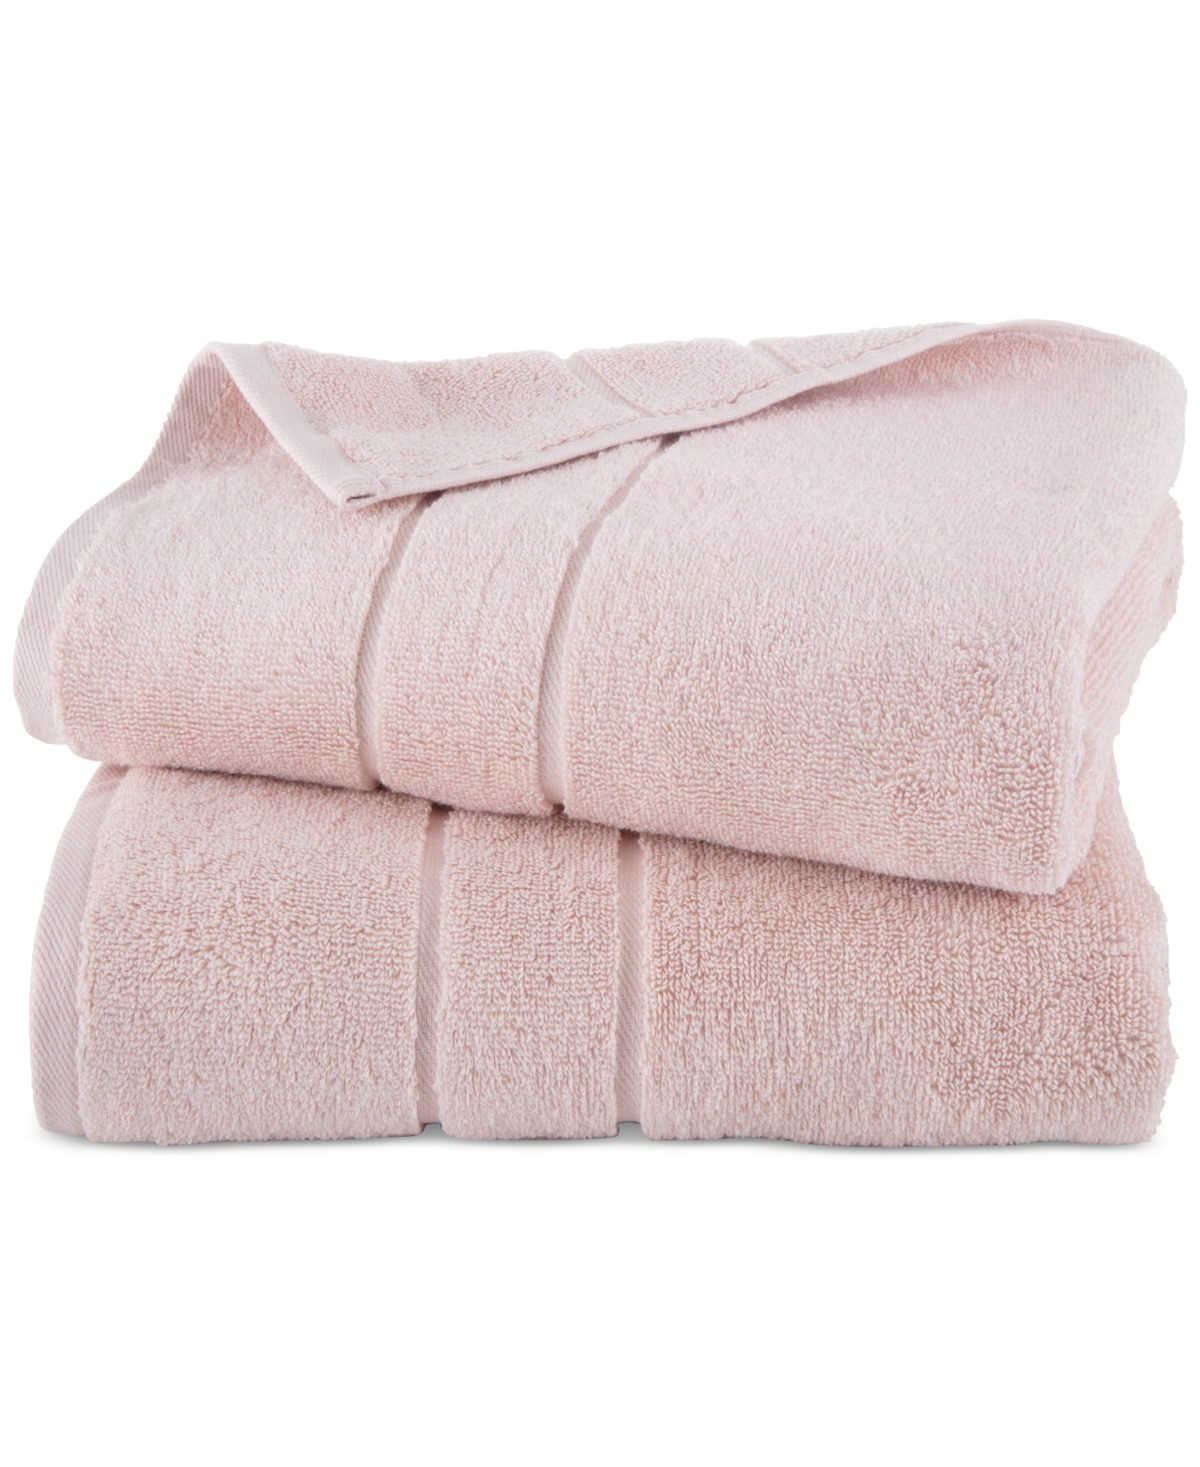 The Clean Bath Towel by Martex - United Textile Supply